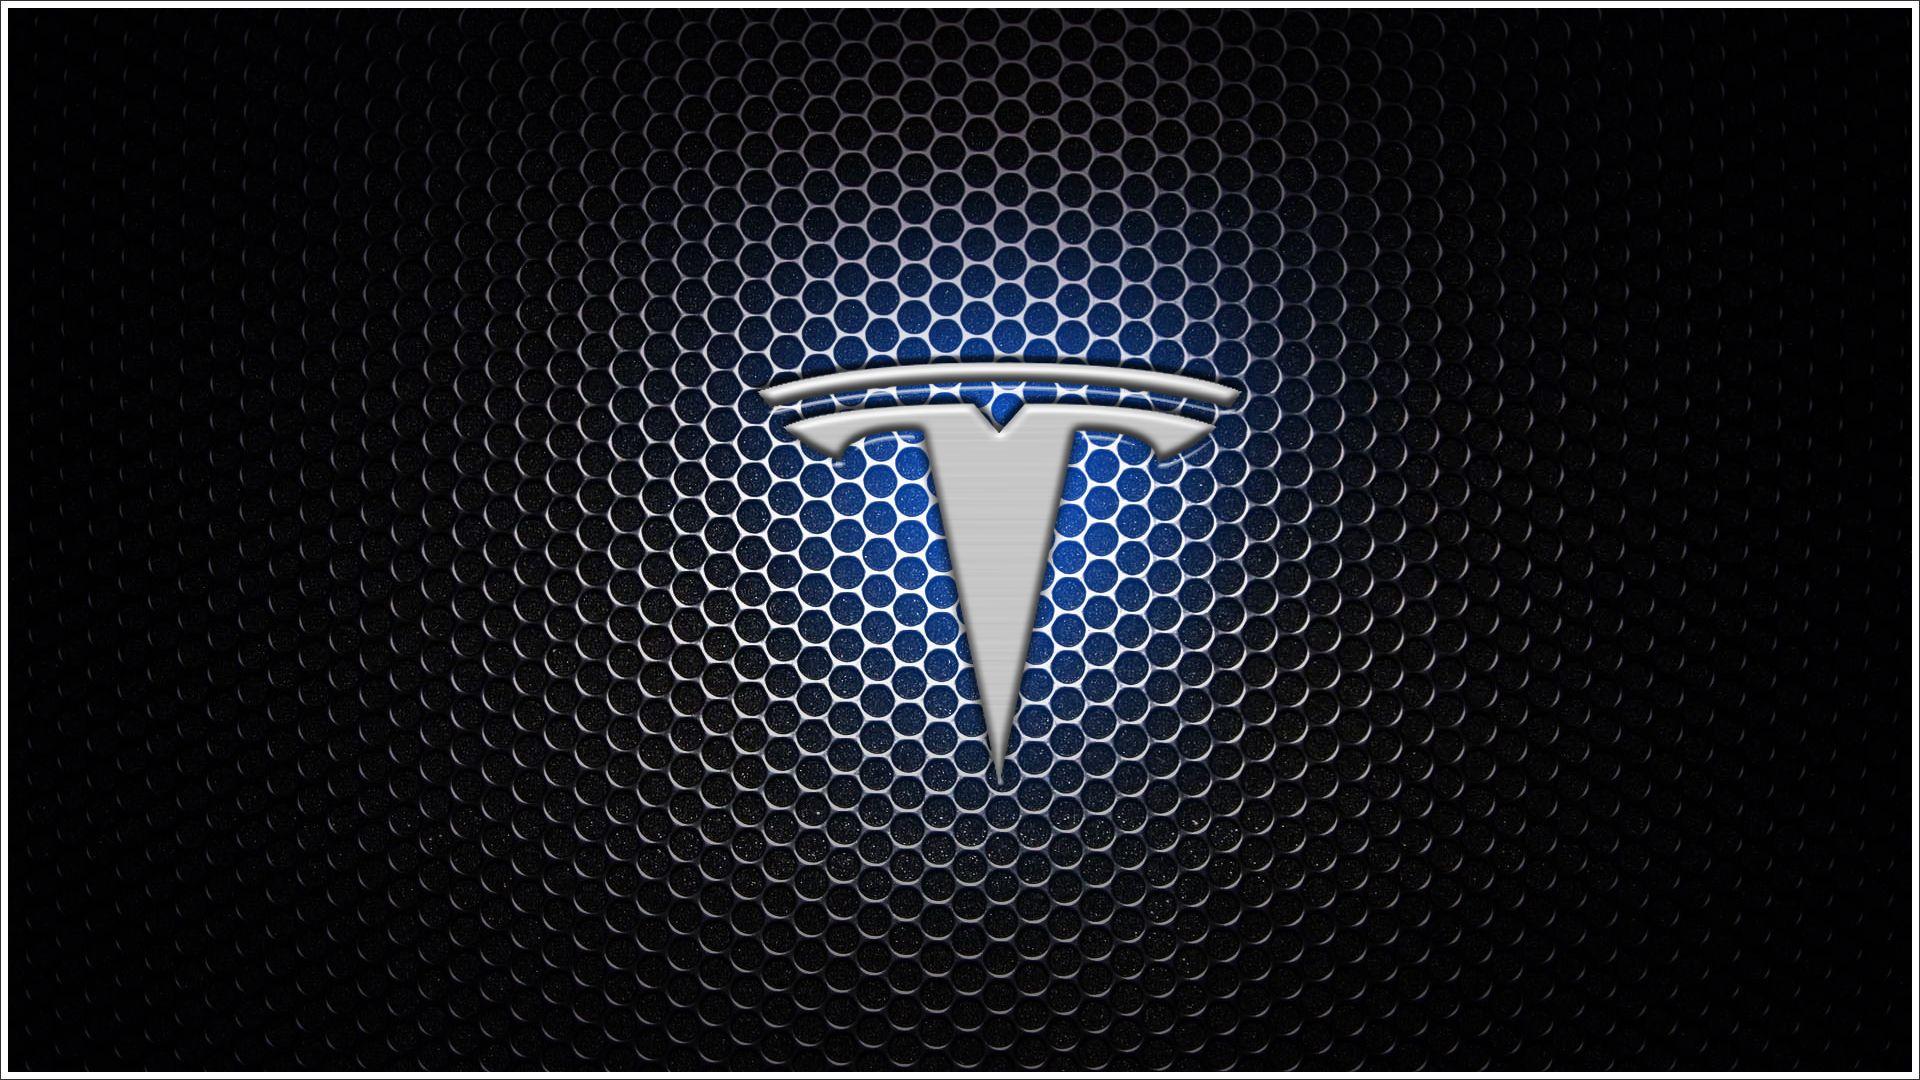 Blue Tesla Logo - Tesla Logo Meaning and History, latest models | World Cars Brands